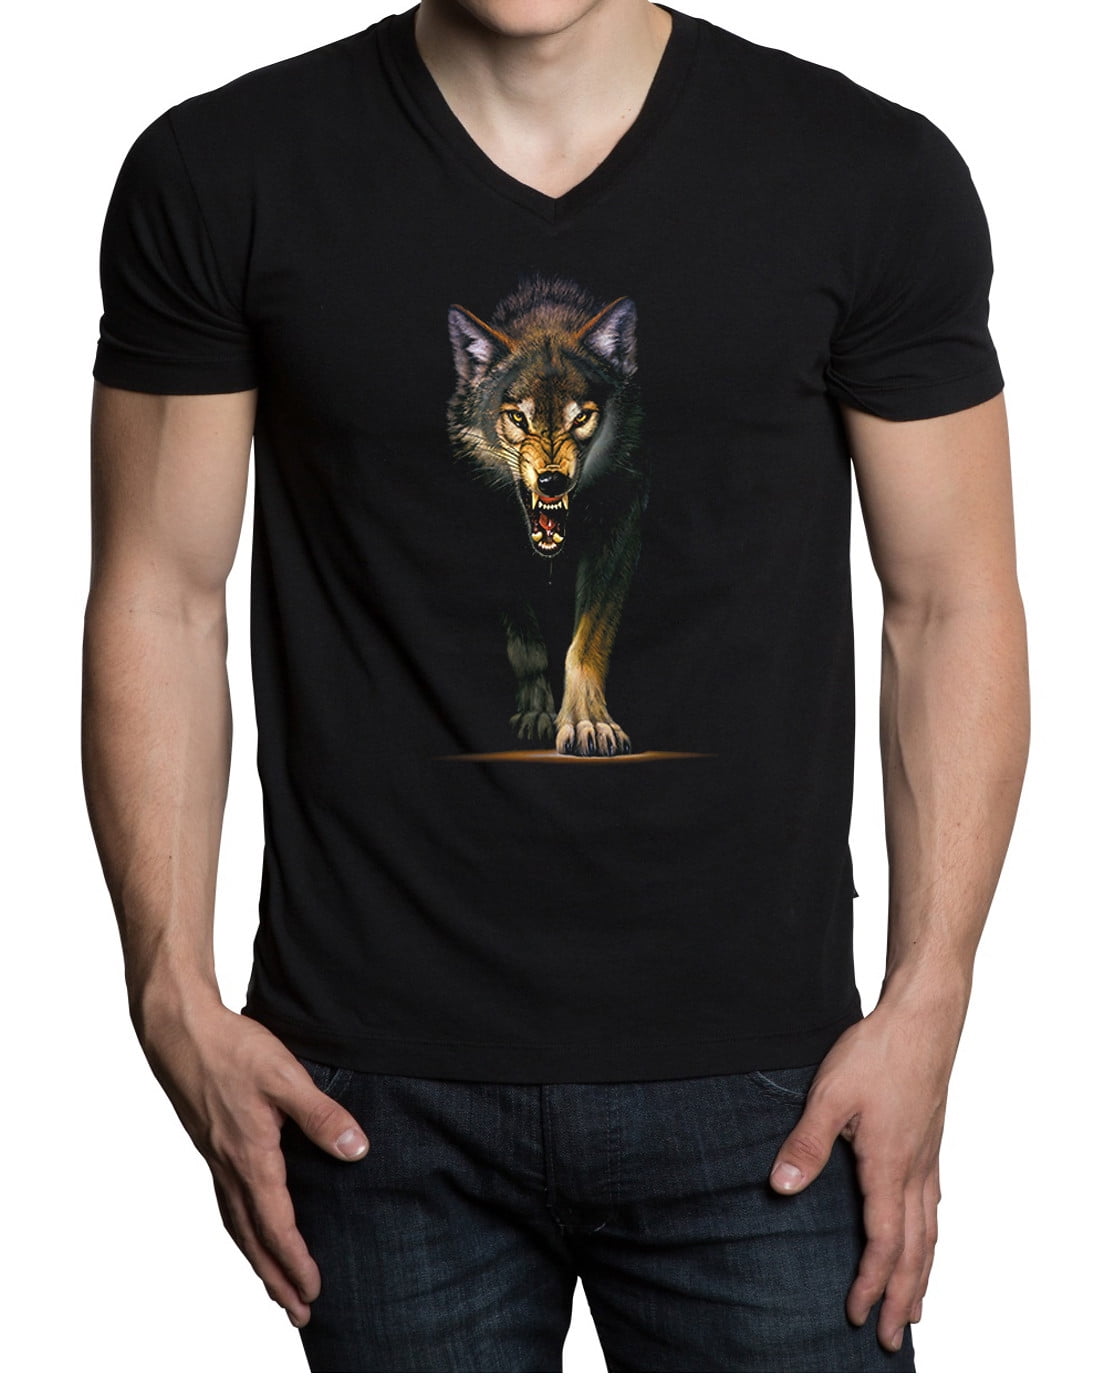 Wolf T-shirt Outdoors Quebec Graphic Shirt Canada Animal Print Nature Shirt The Mandala Wolf Shirt for Men & Women Wolf Art